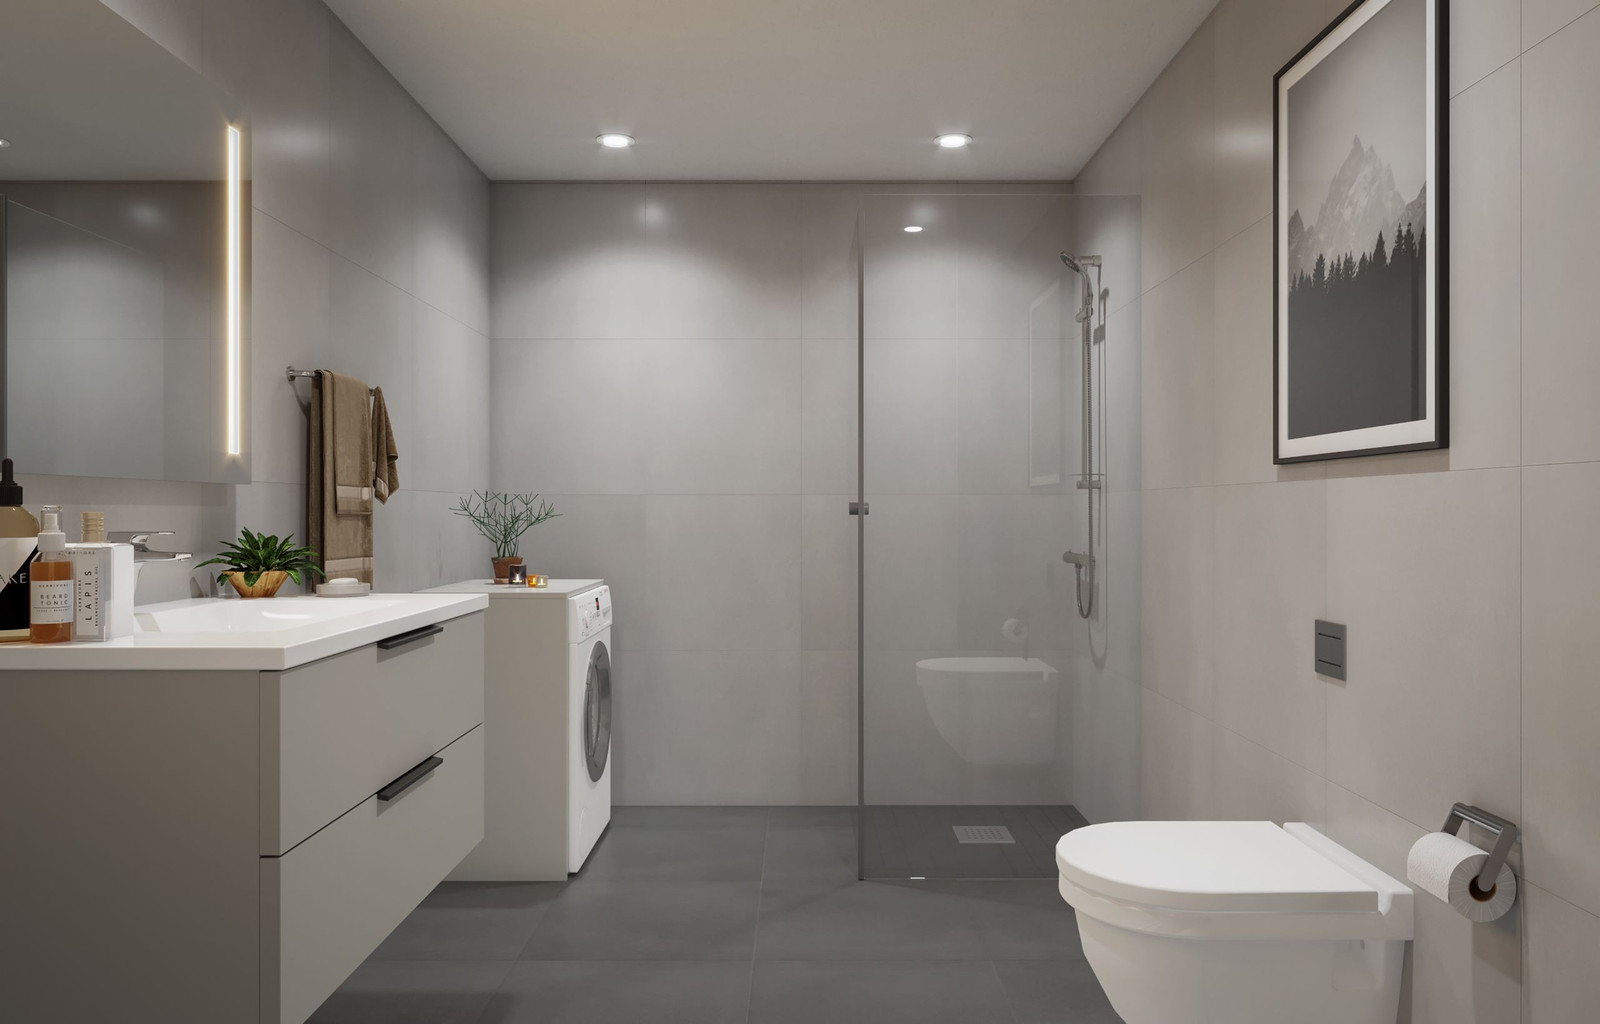 Bad vil få en moderne utførelse med 60x60 fliser på gulv